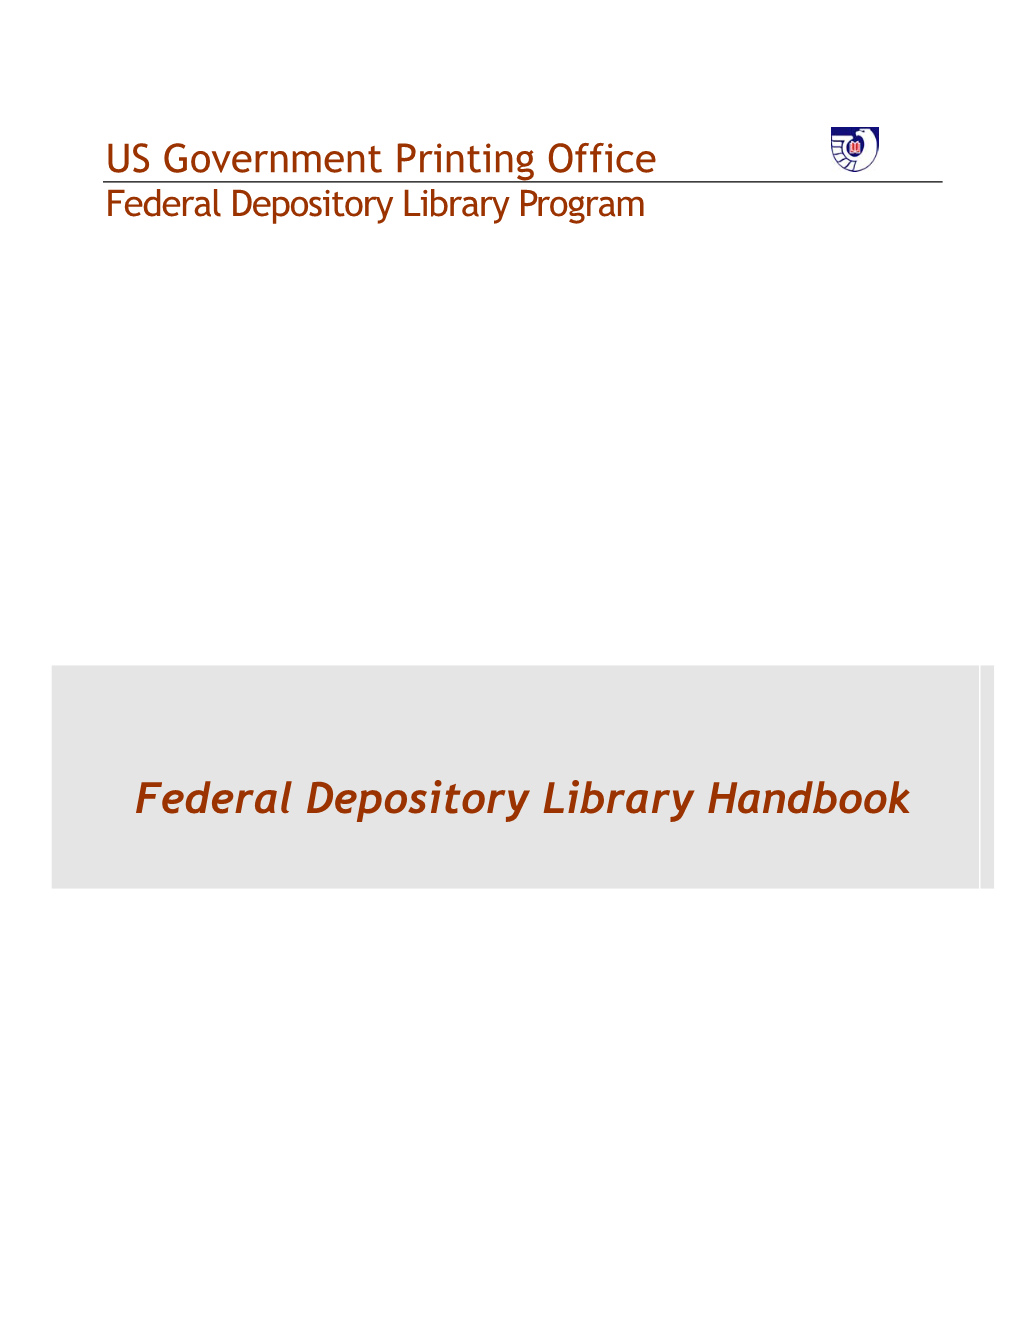 Federal Depository Library Handbook